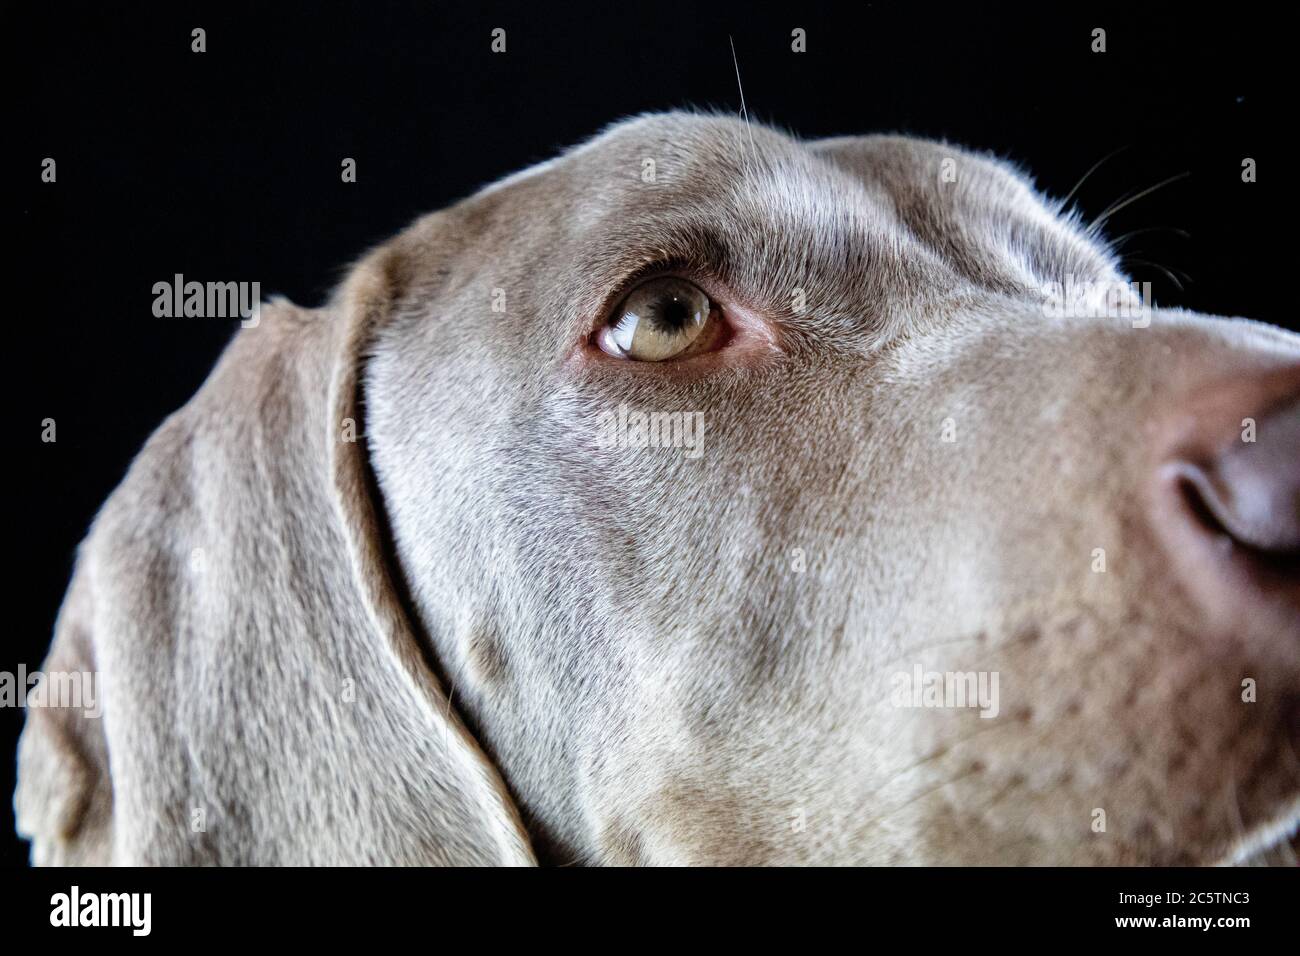 Weimaraner - Studio Dog Portraits. Stockfoto